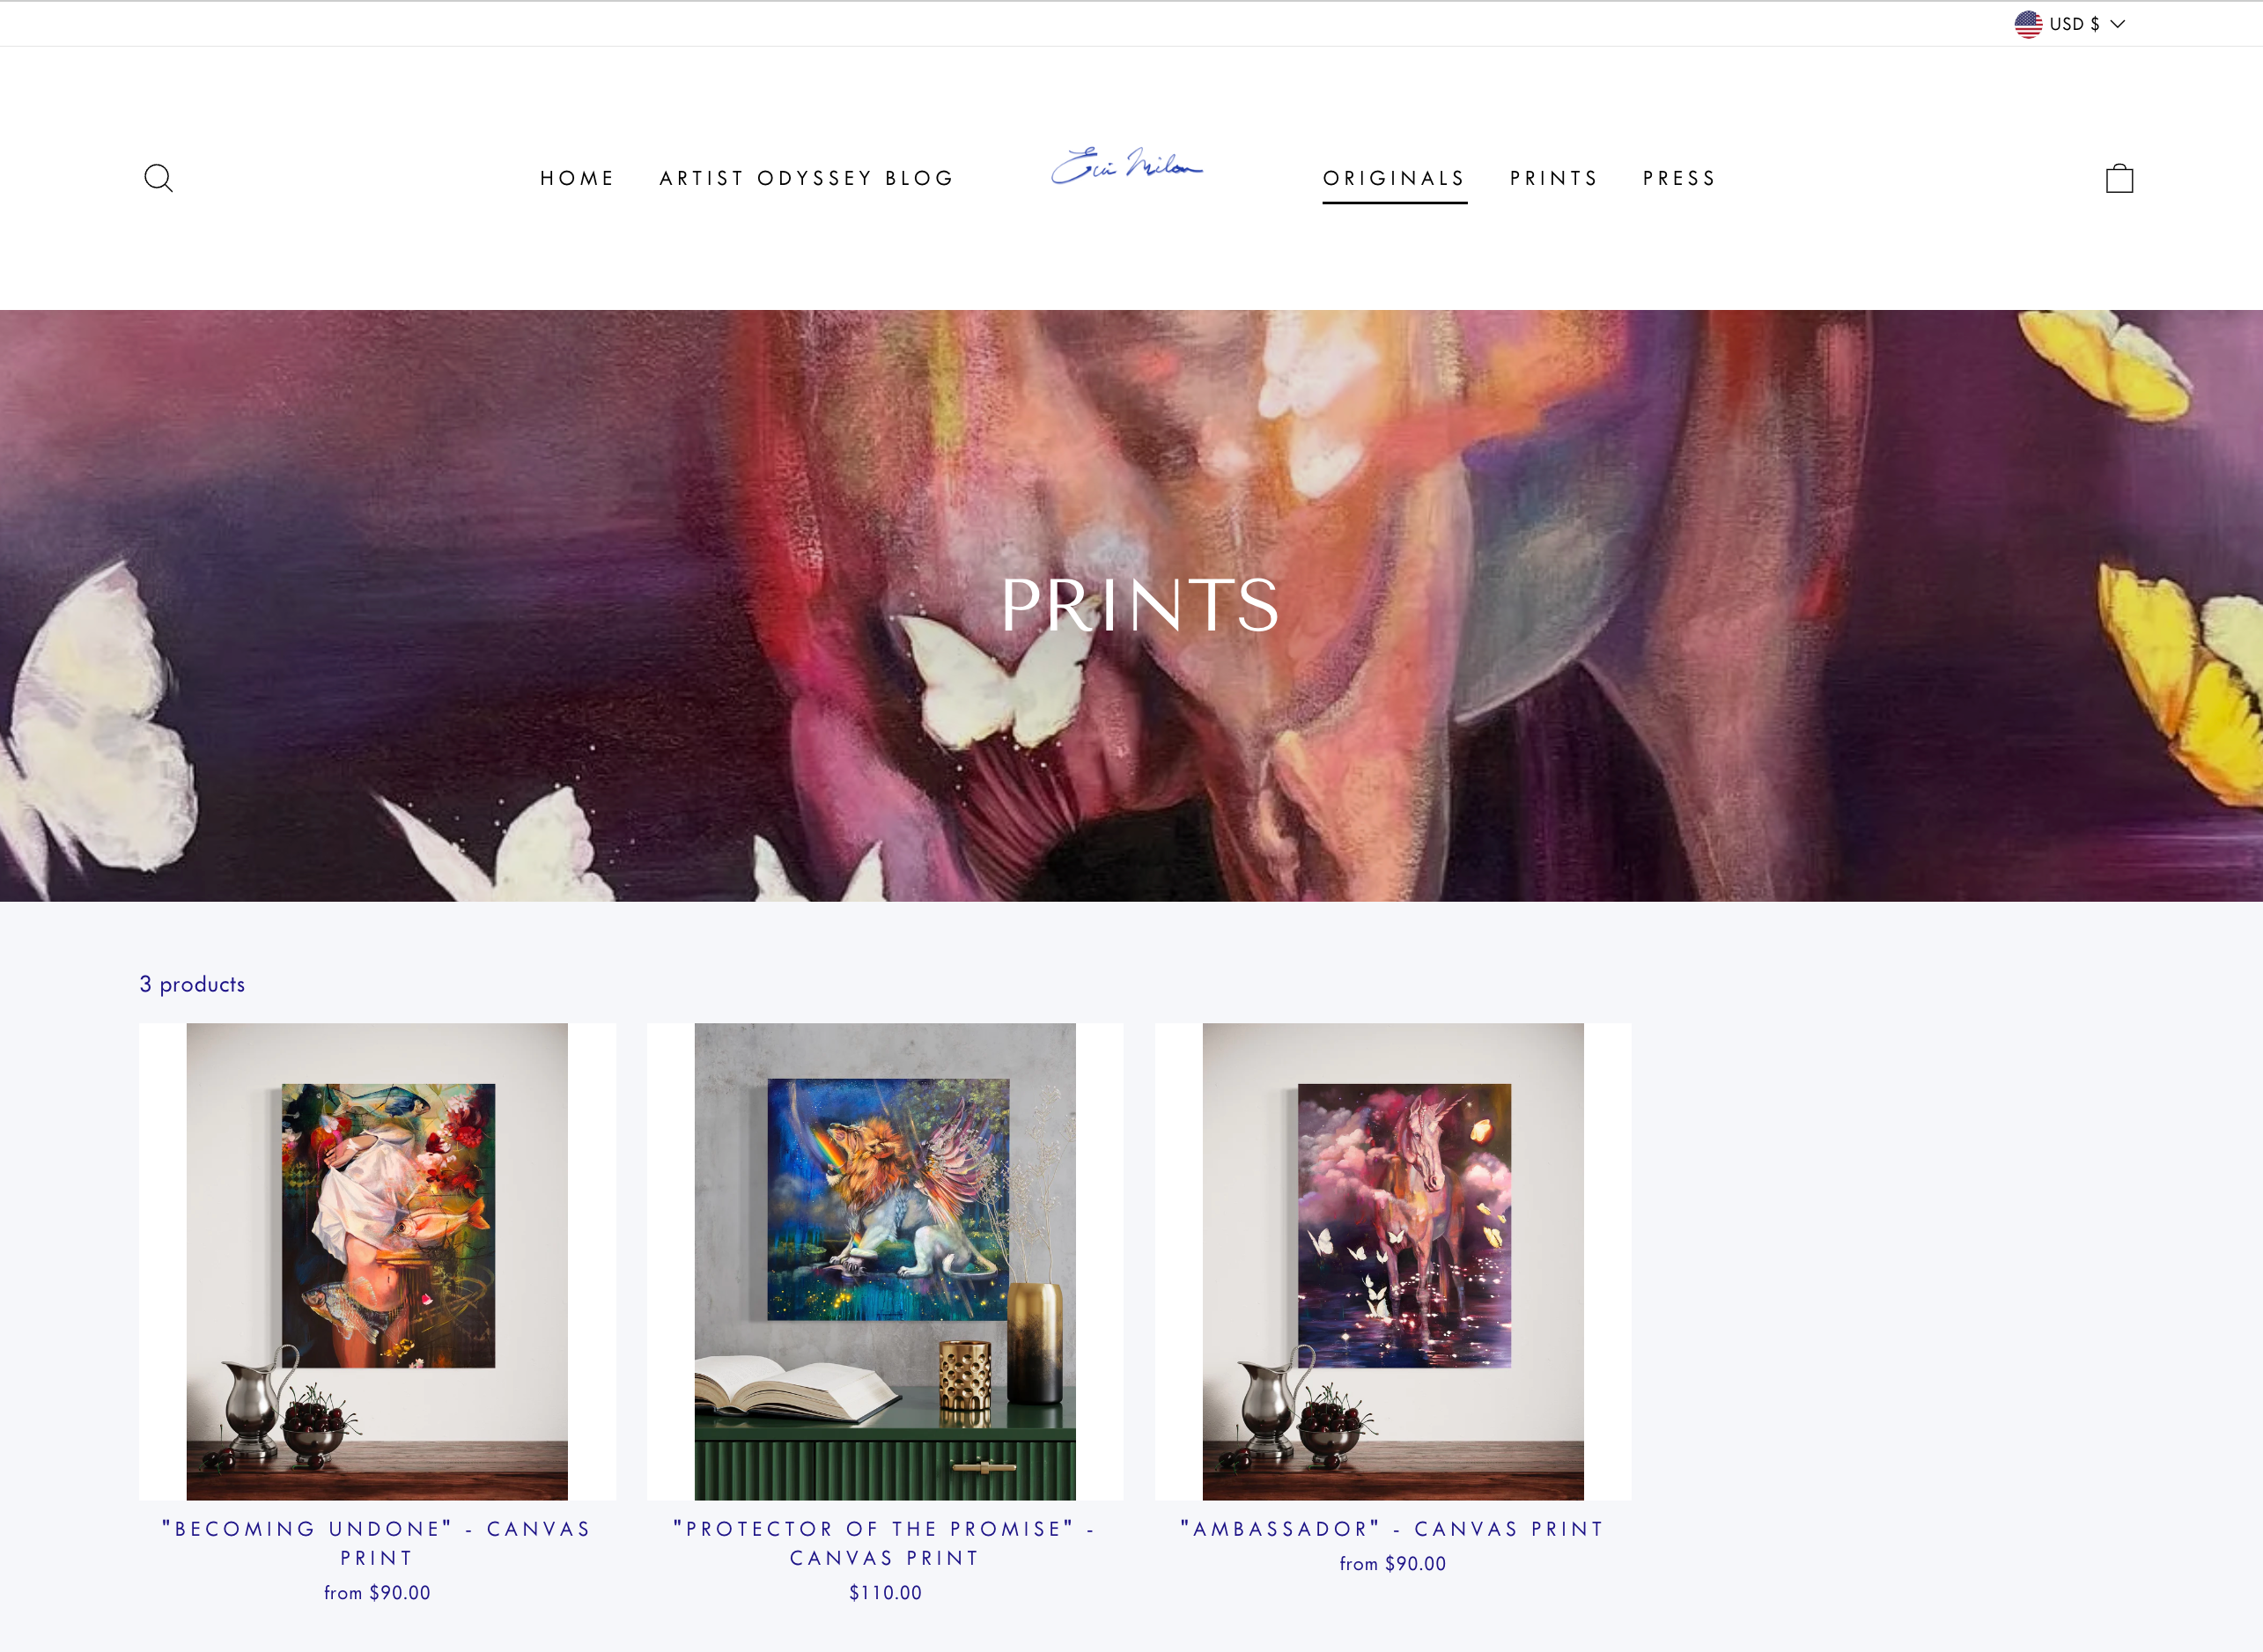 Professional artist Elli Milan's online art prints store